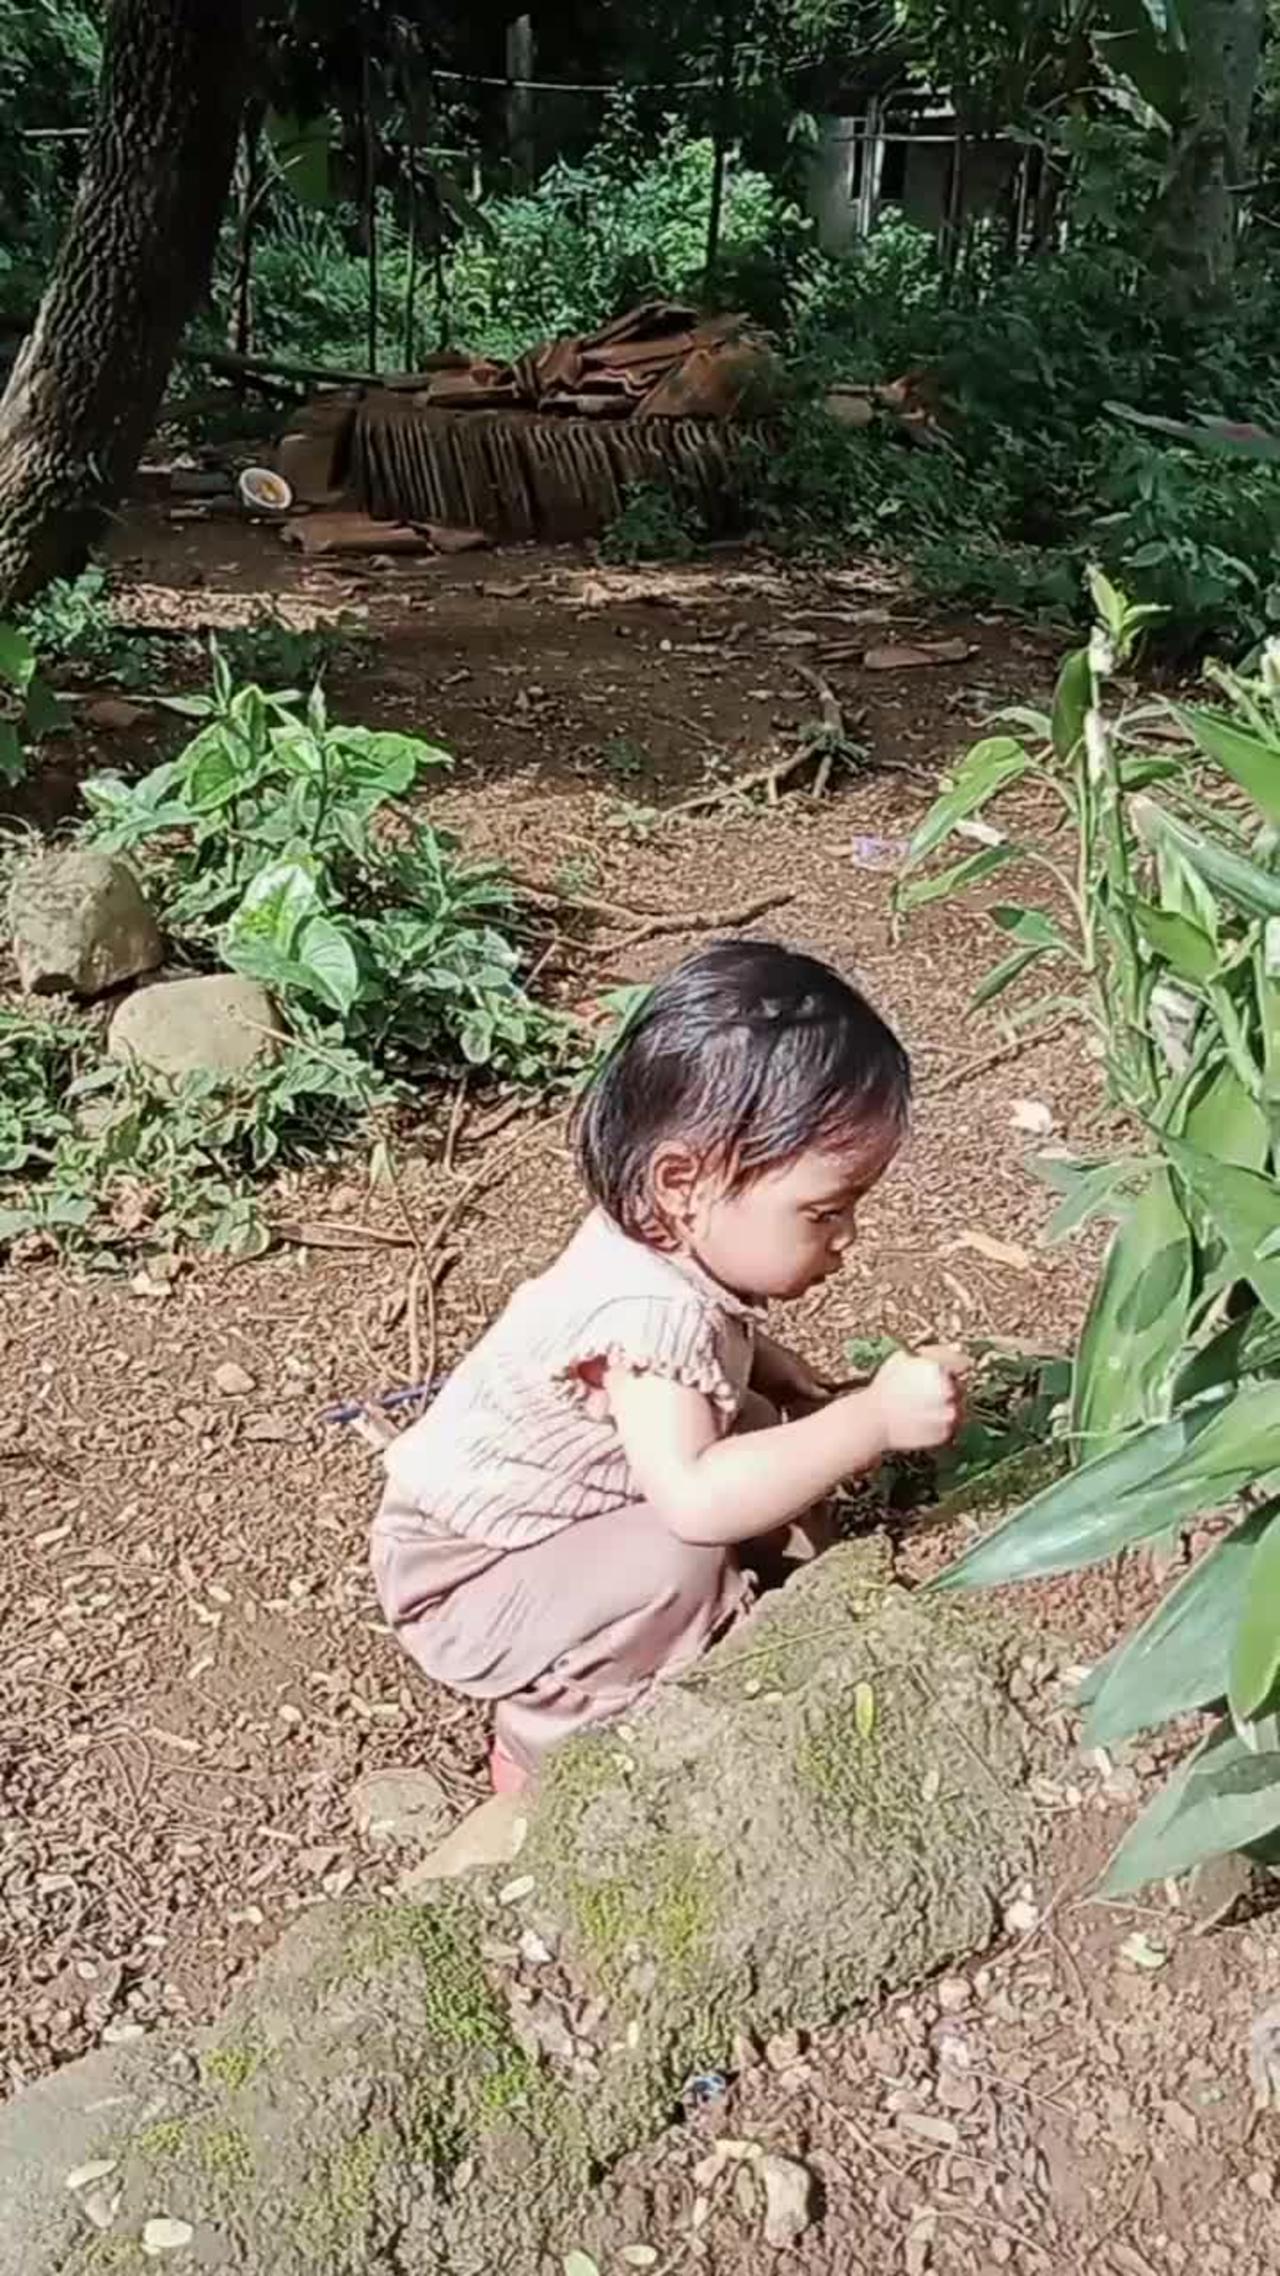 jinan playing in the garden